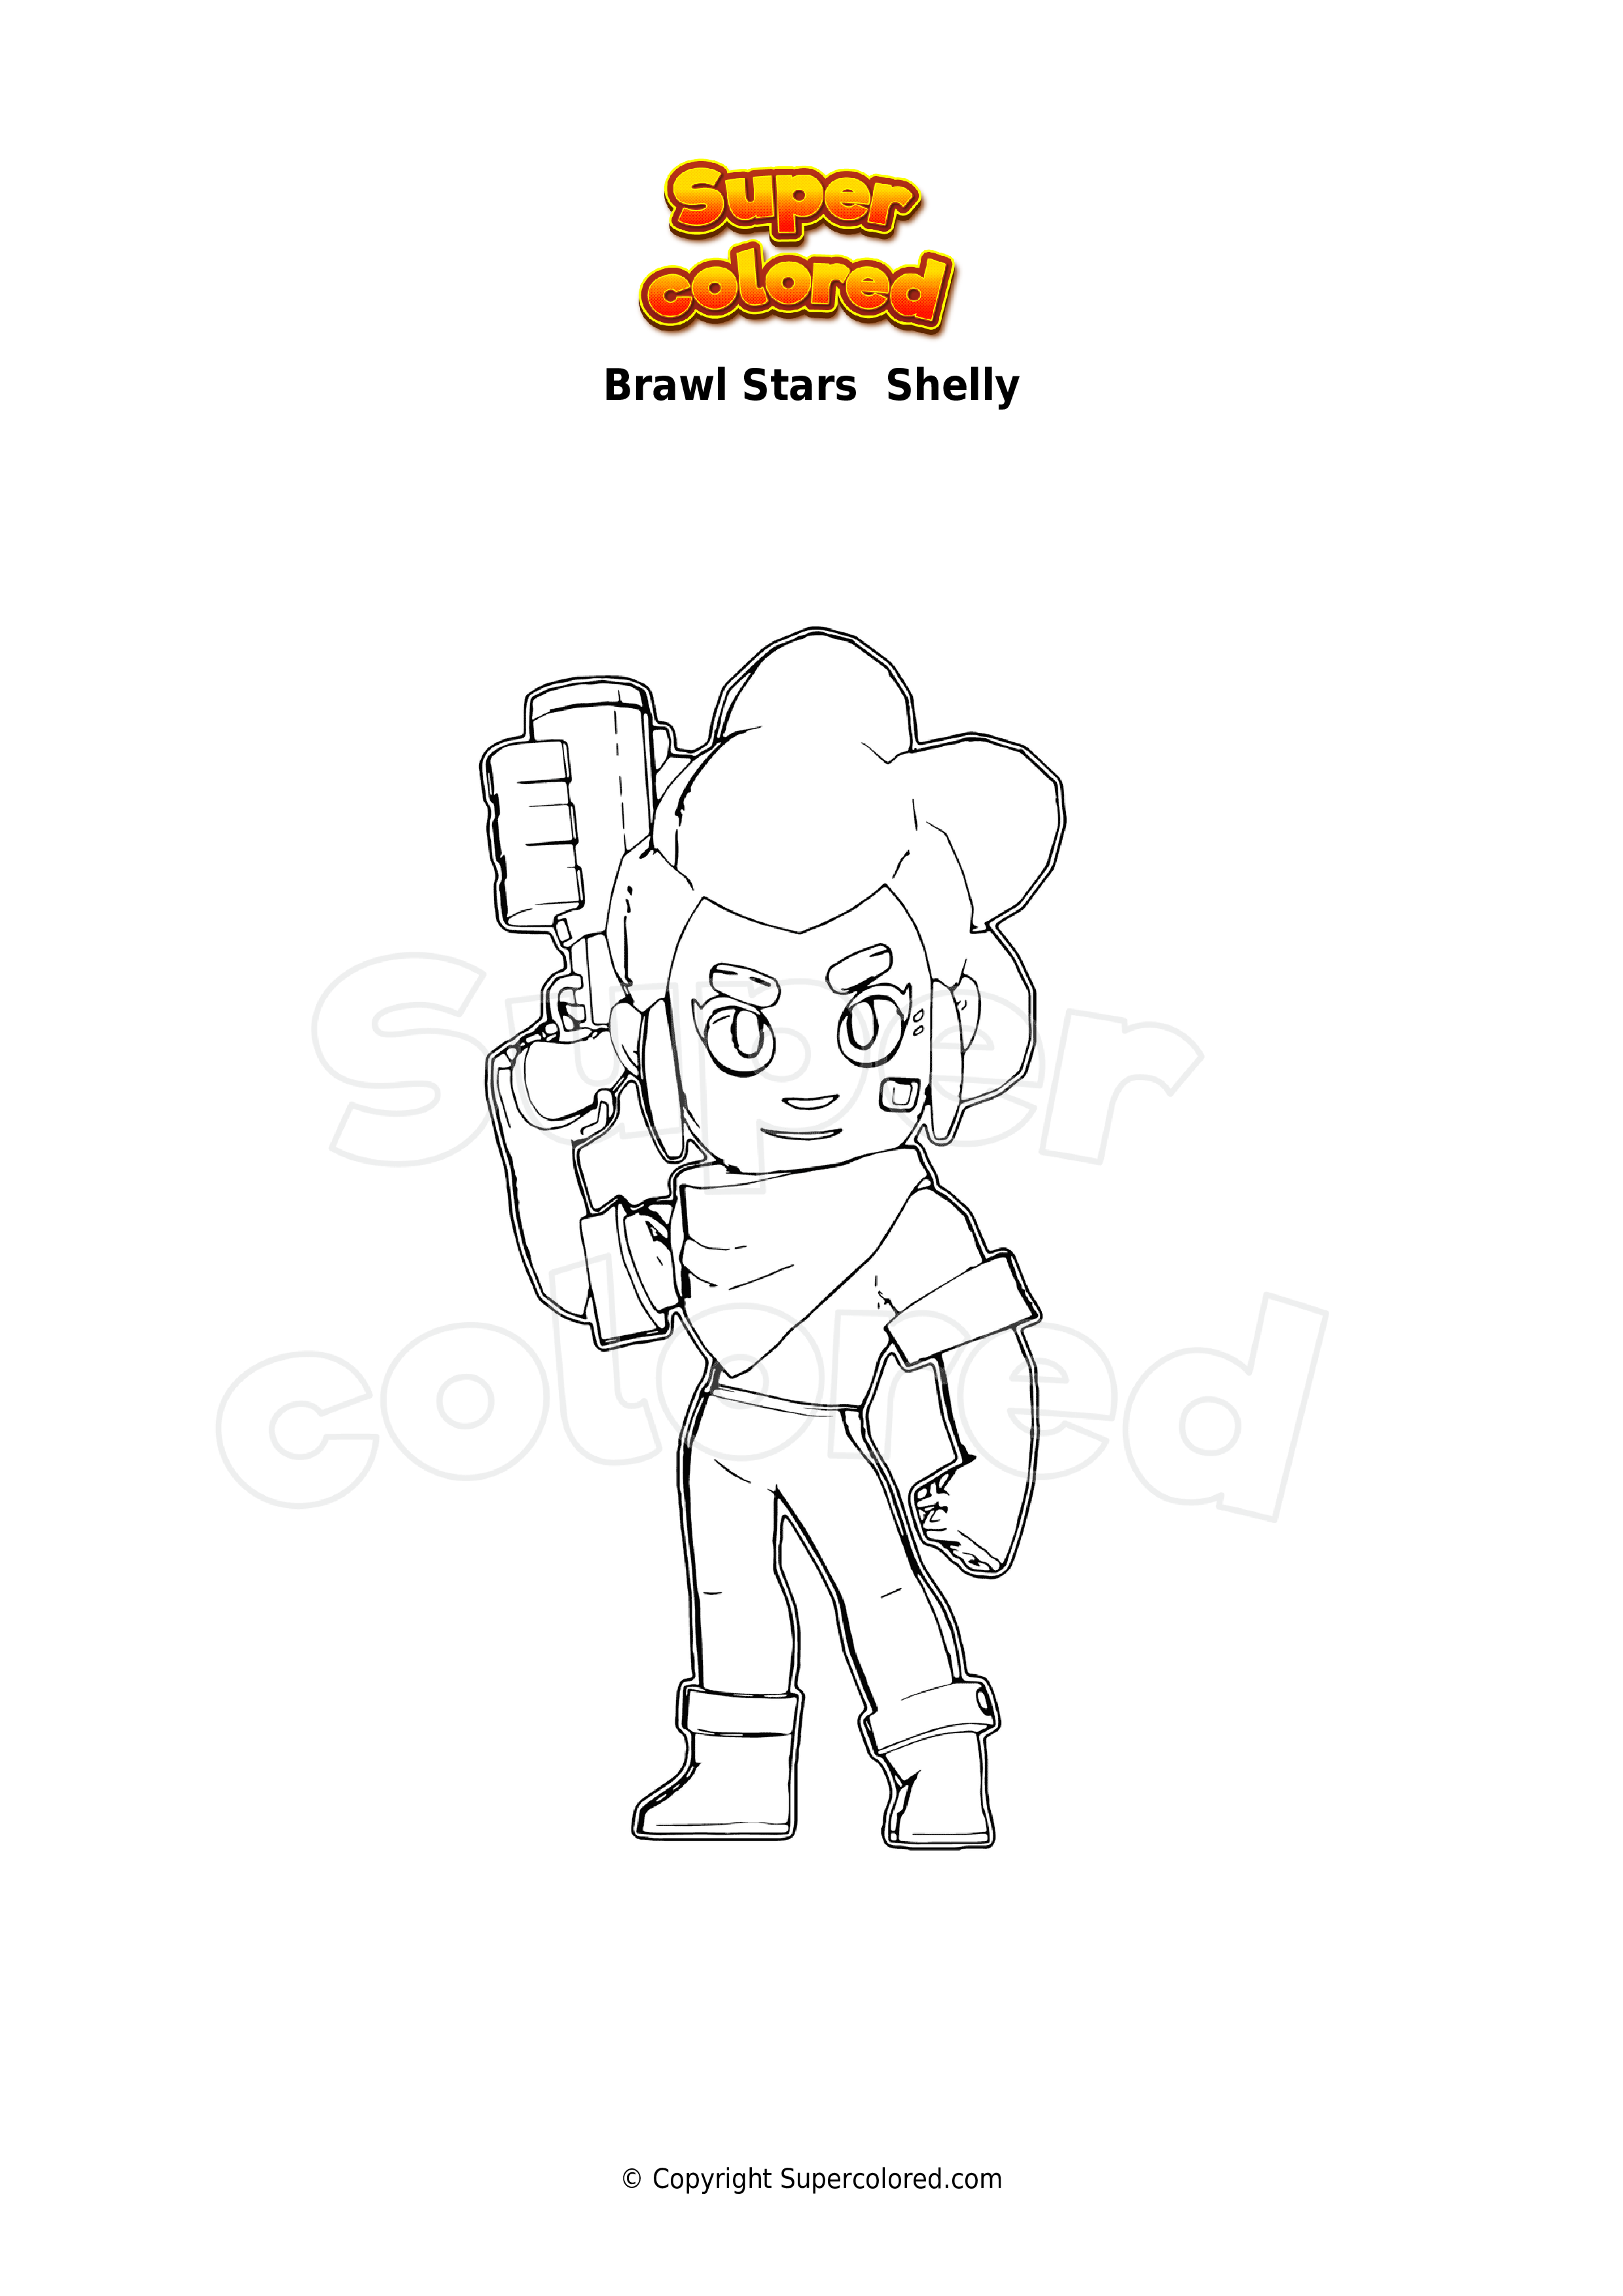 Dibujo Para Colorear Brawl Stars Shelly Supercolored Com - shelly dibujos de brawl stars para colorear